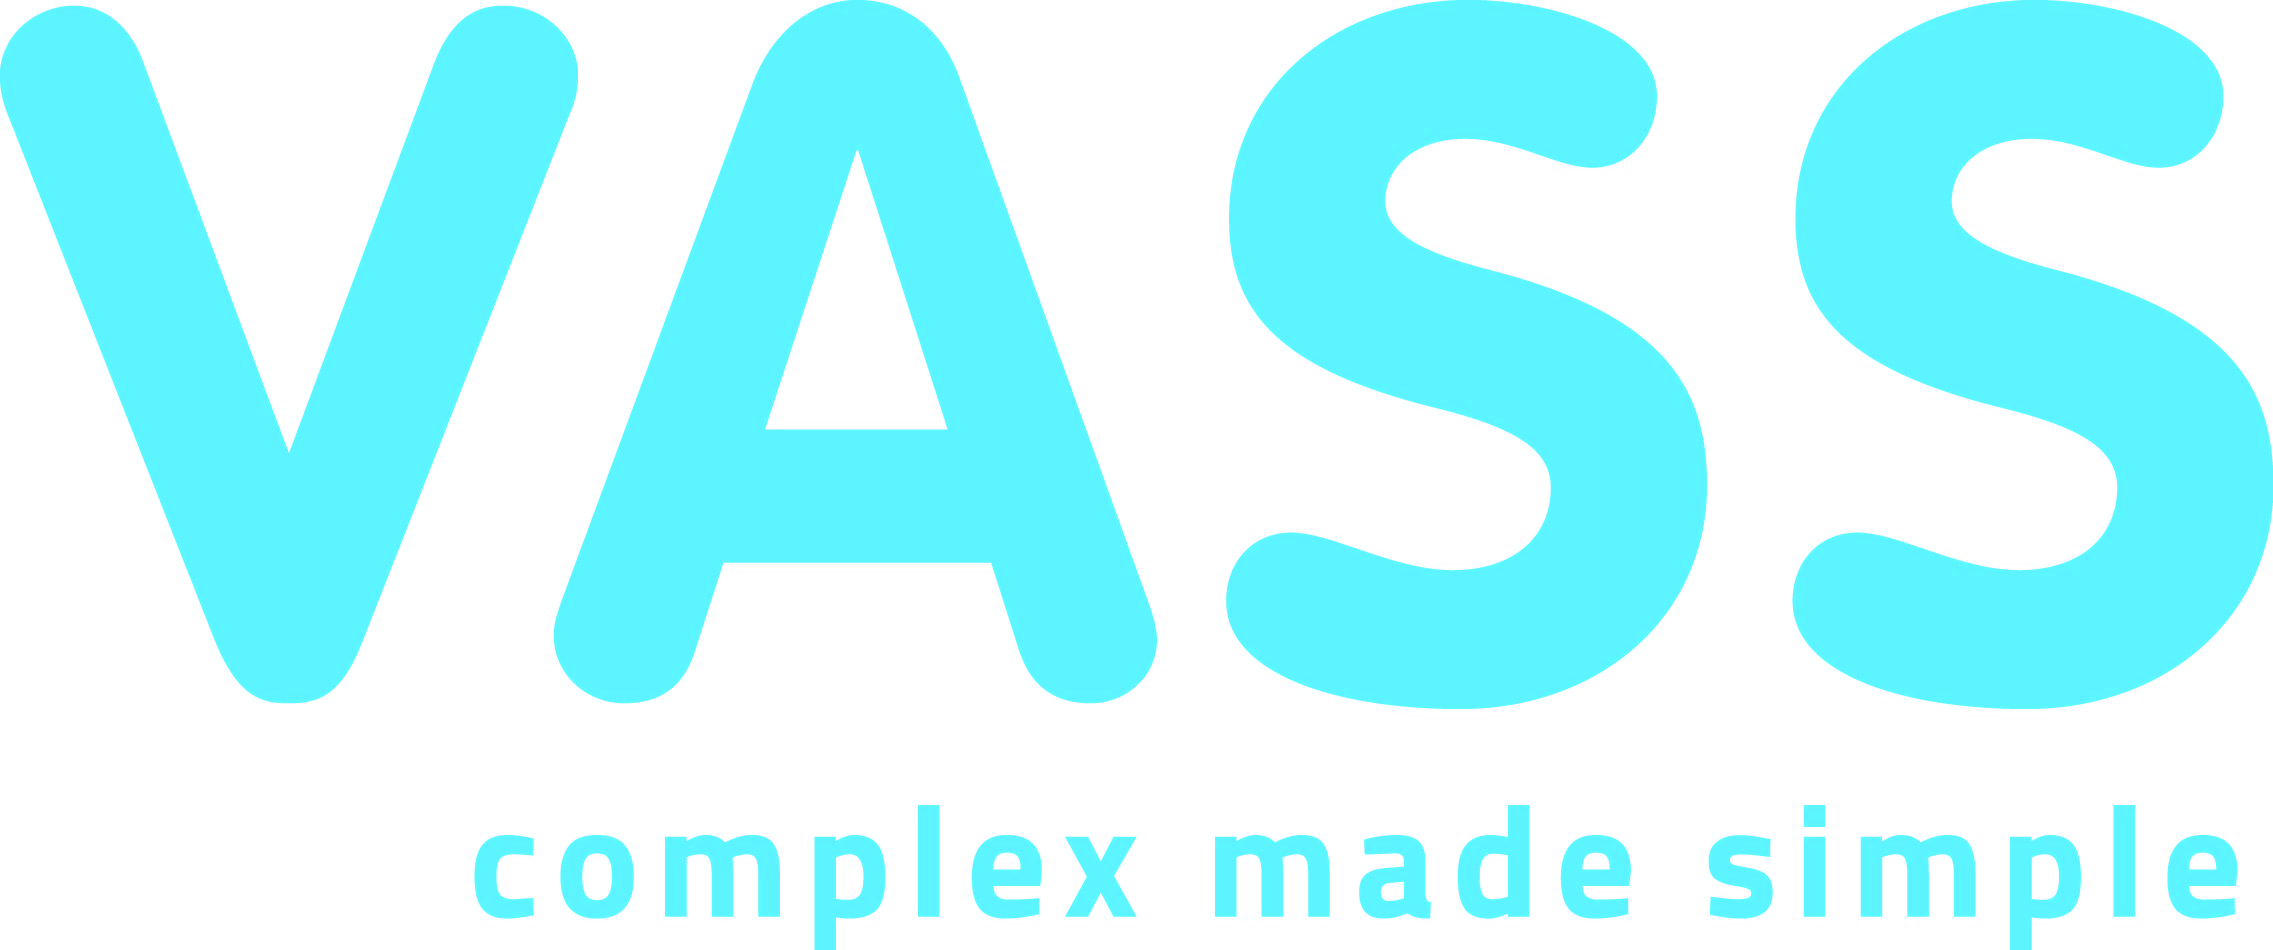 Logo Vass